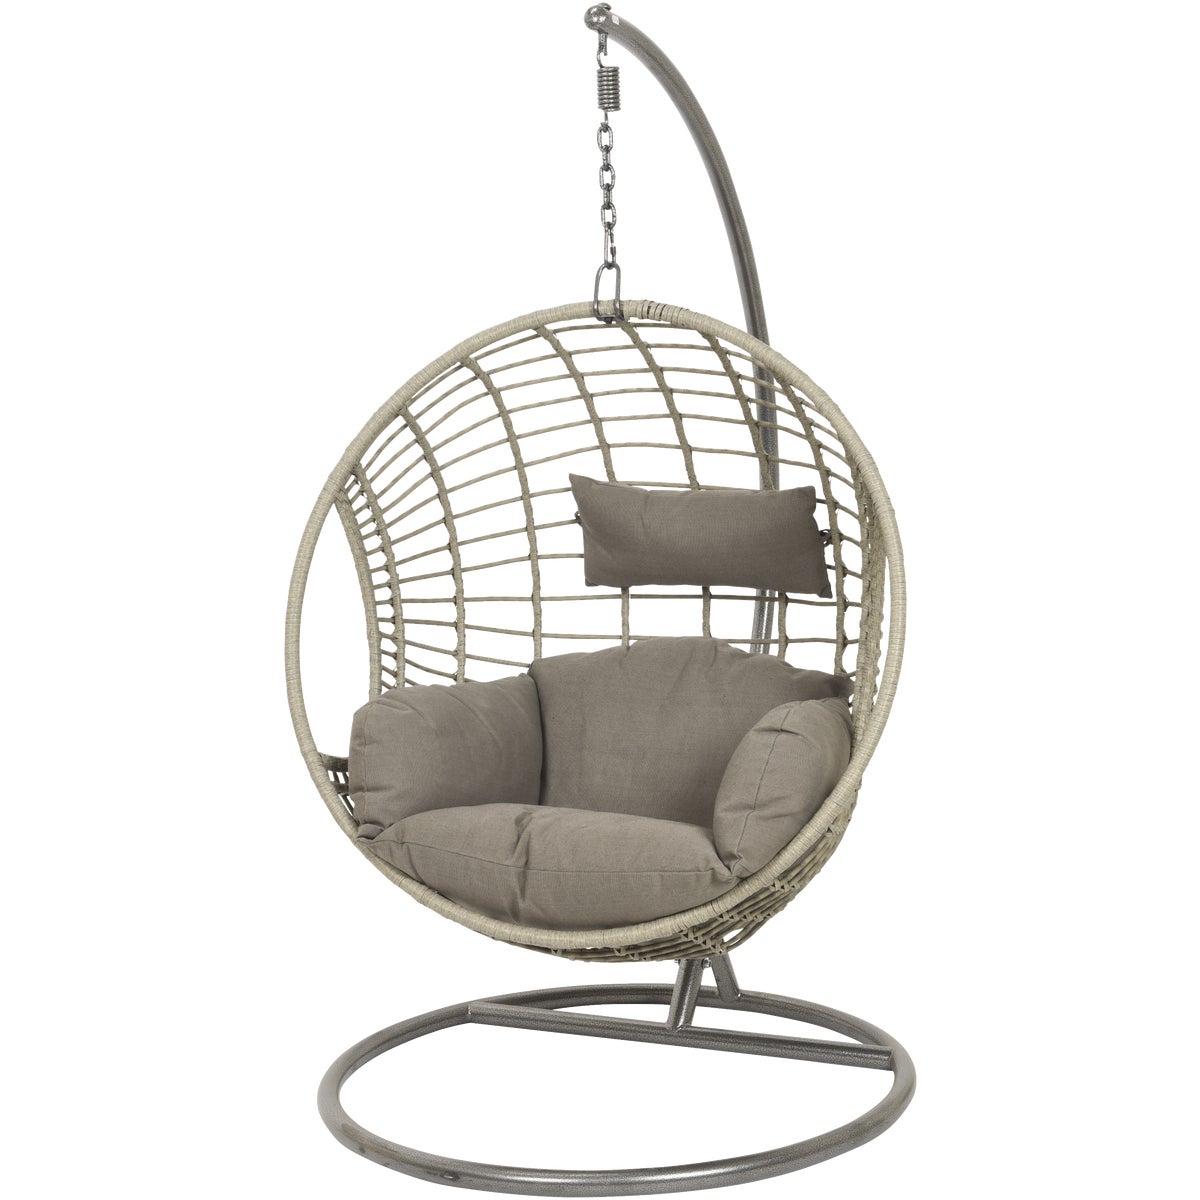 Decoris Garden Furniture London Gray Outdoor Wicker Hanging Egg Chair